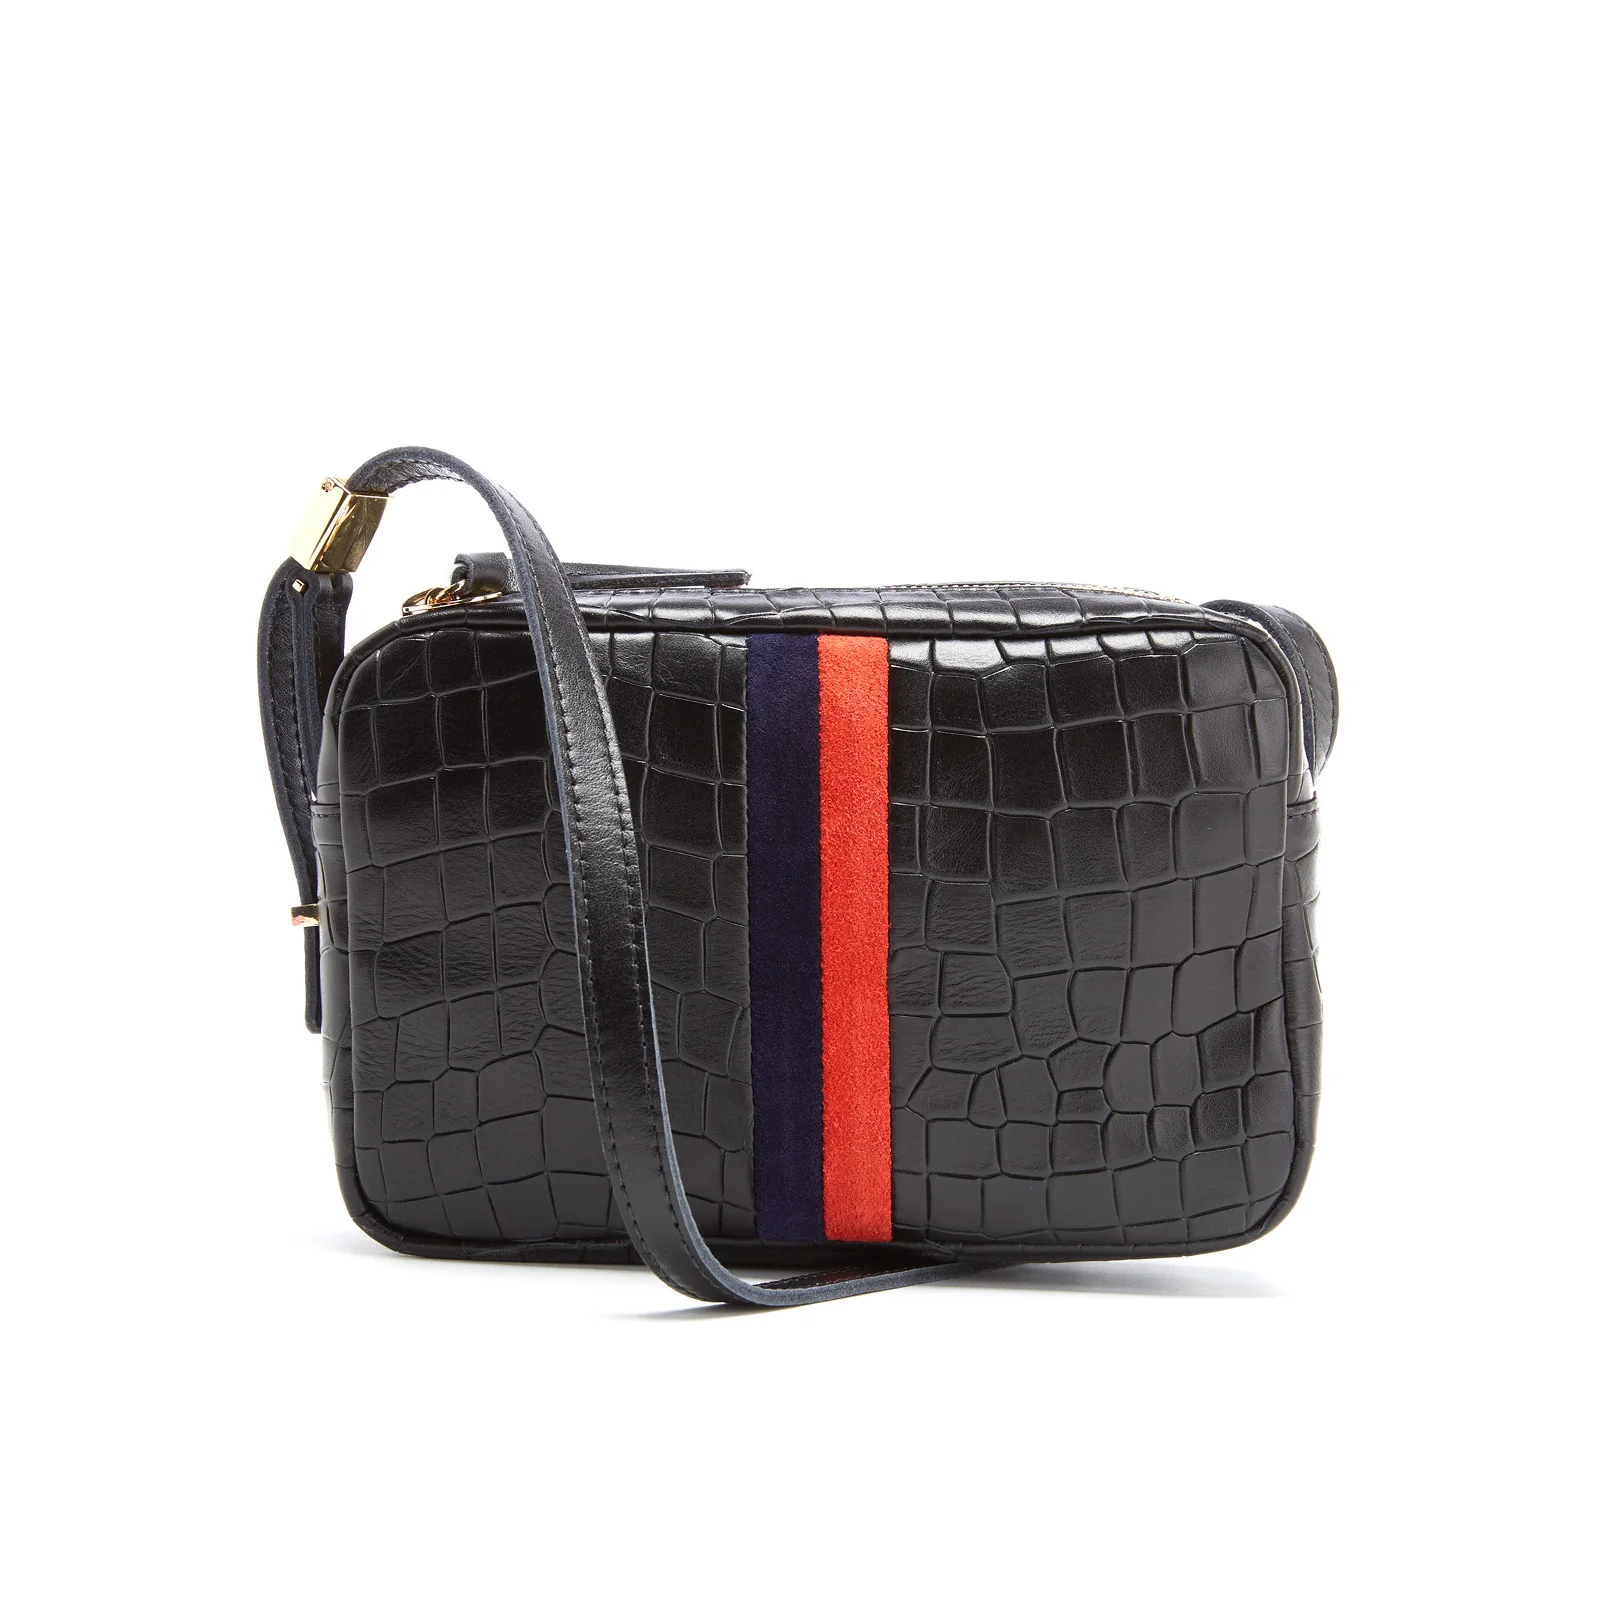 Clare V. Women's Mini Sac Cross Body Bag with Skipper Stripes - Black Tile Croc Image 1